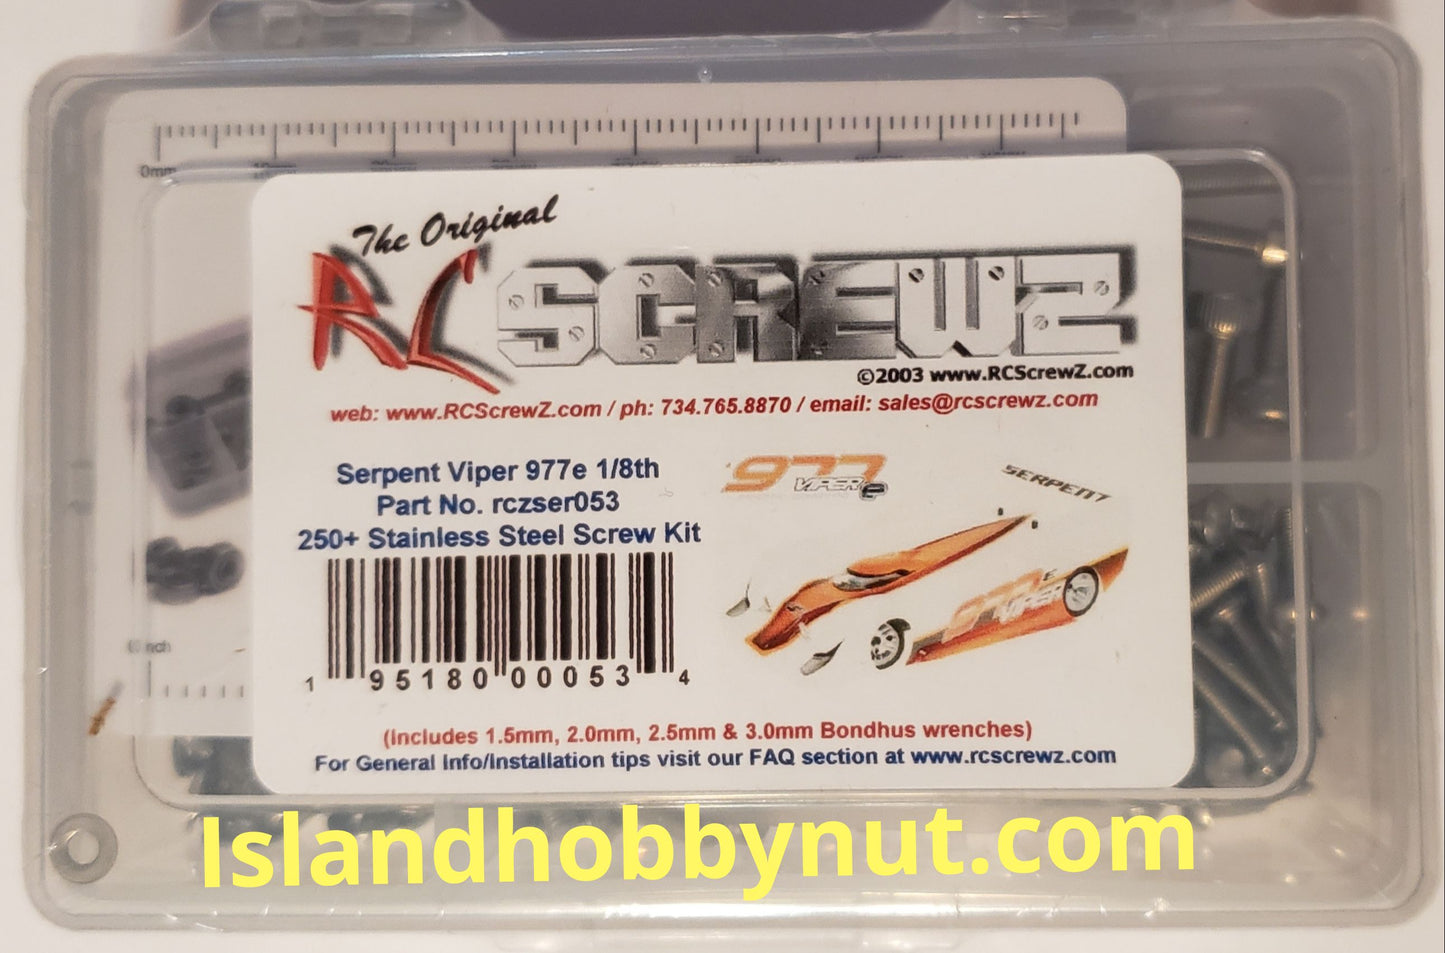 Serpent Viper 977e 1/8th *STAINLESS STEEL* Screw Kit